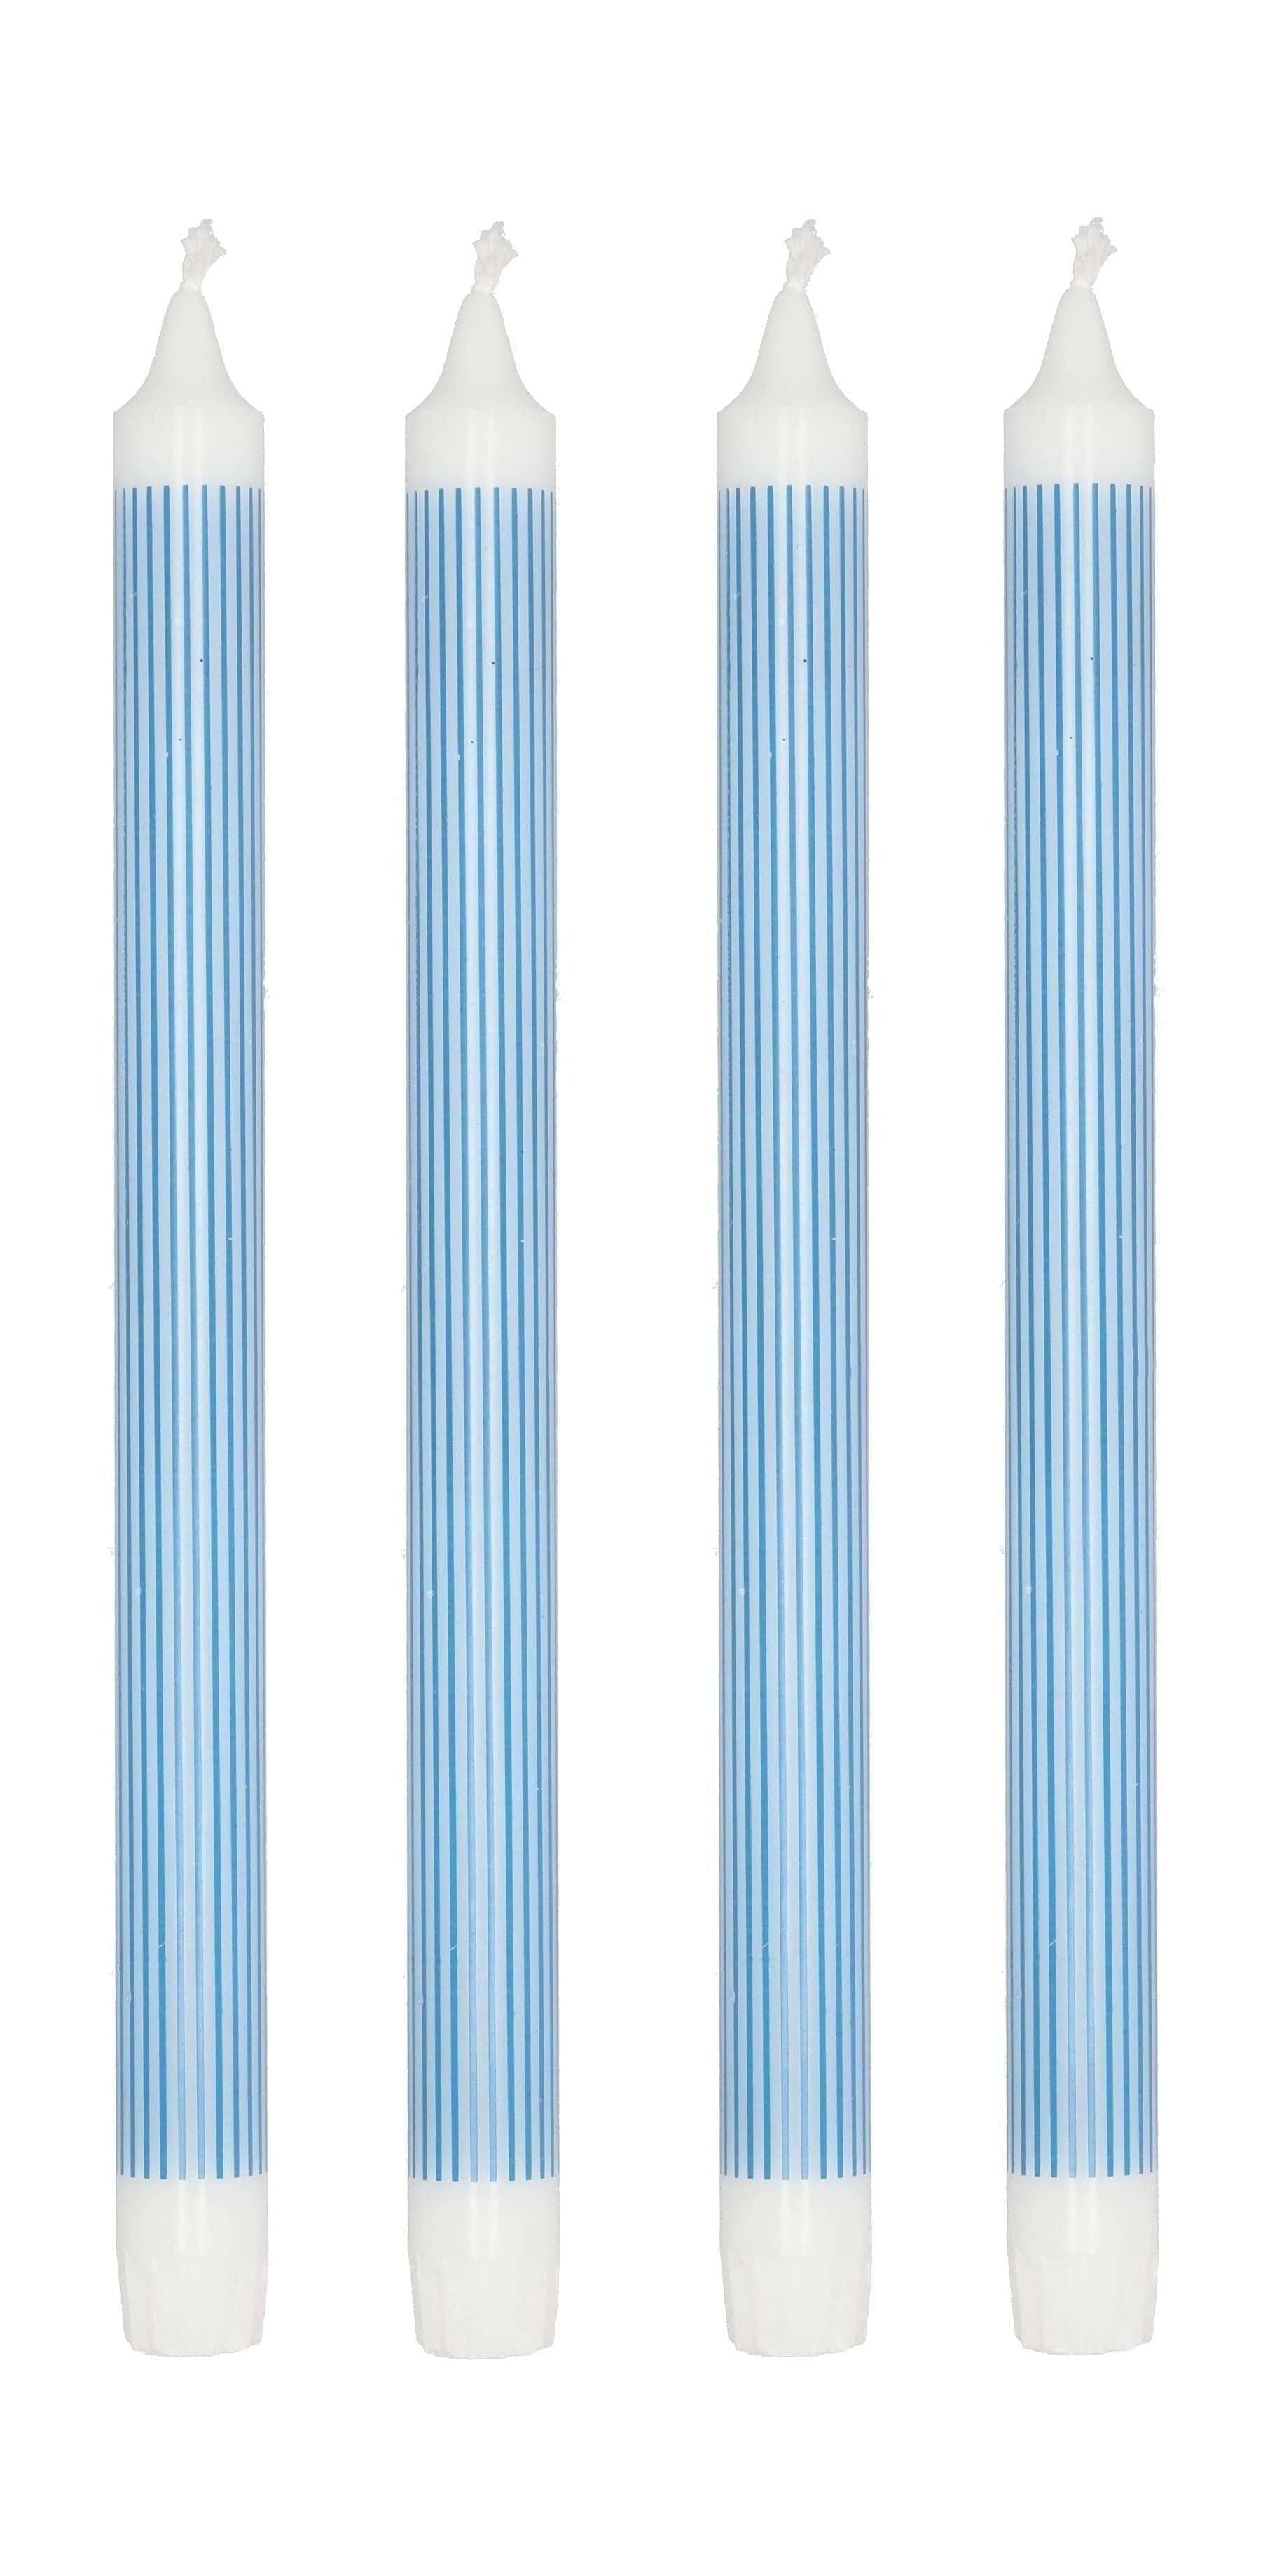 Villa Styles Styles Stick Candle Juego de 4 Øx H 2,2x29, Azul